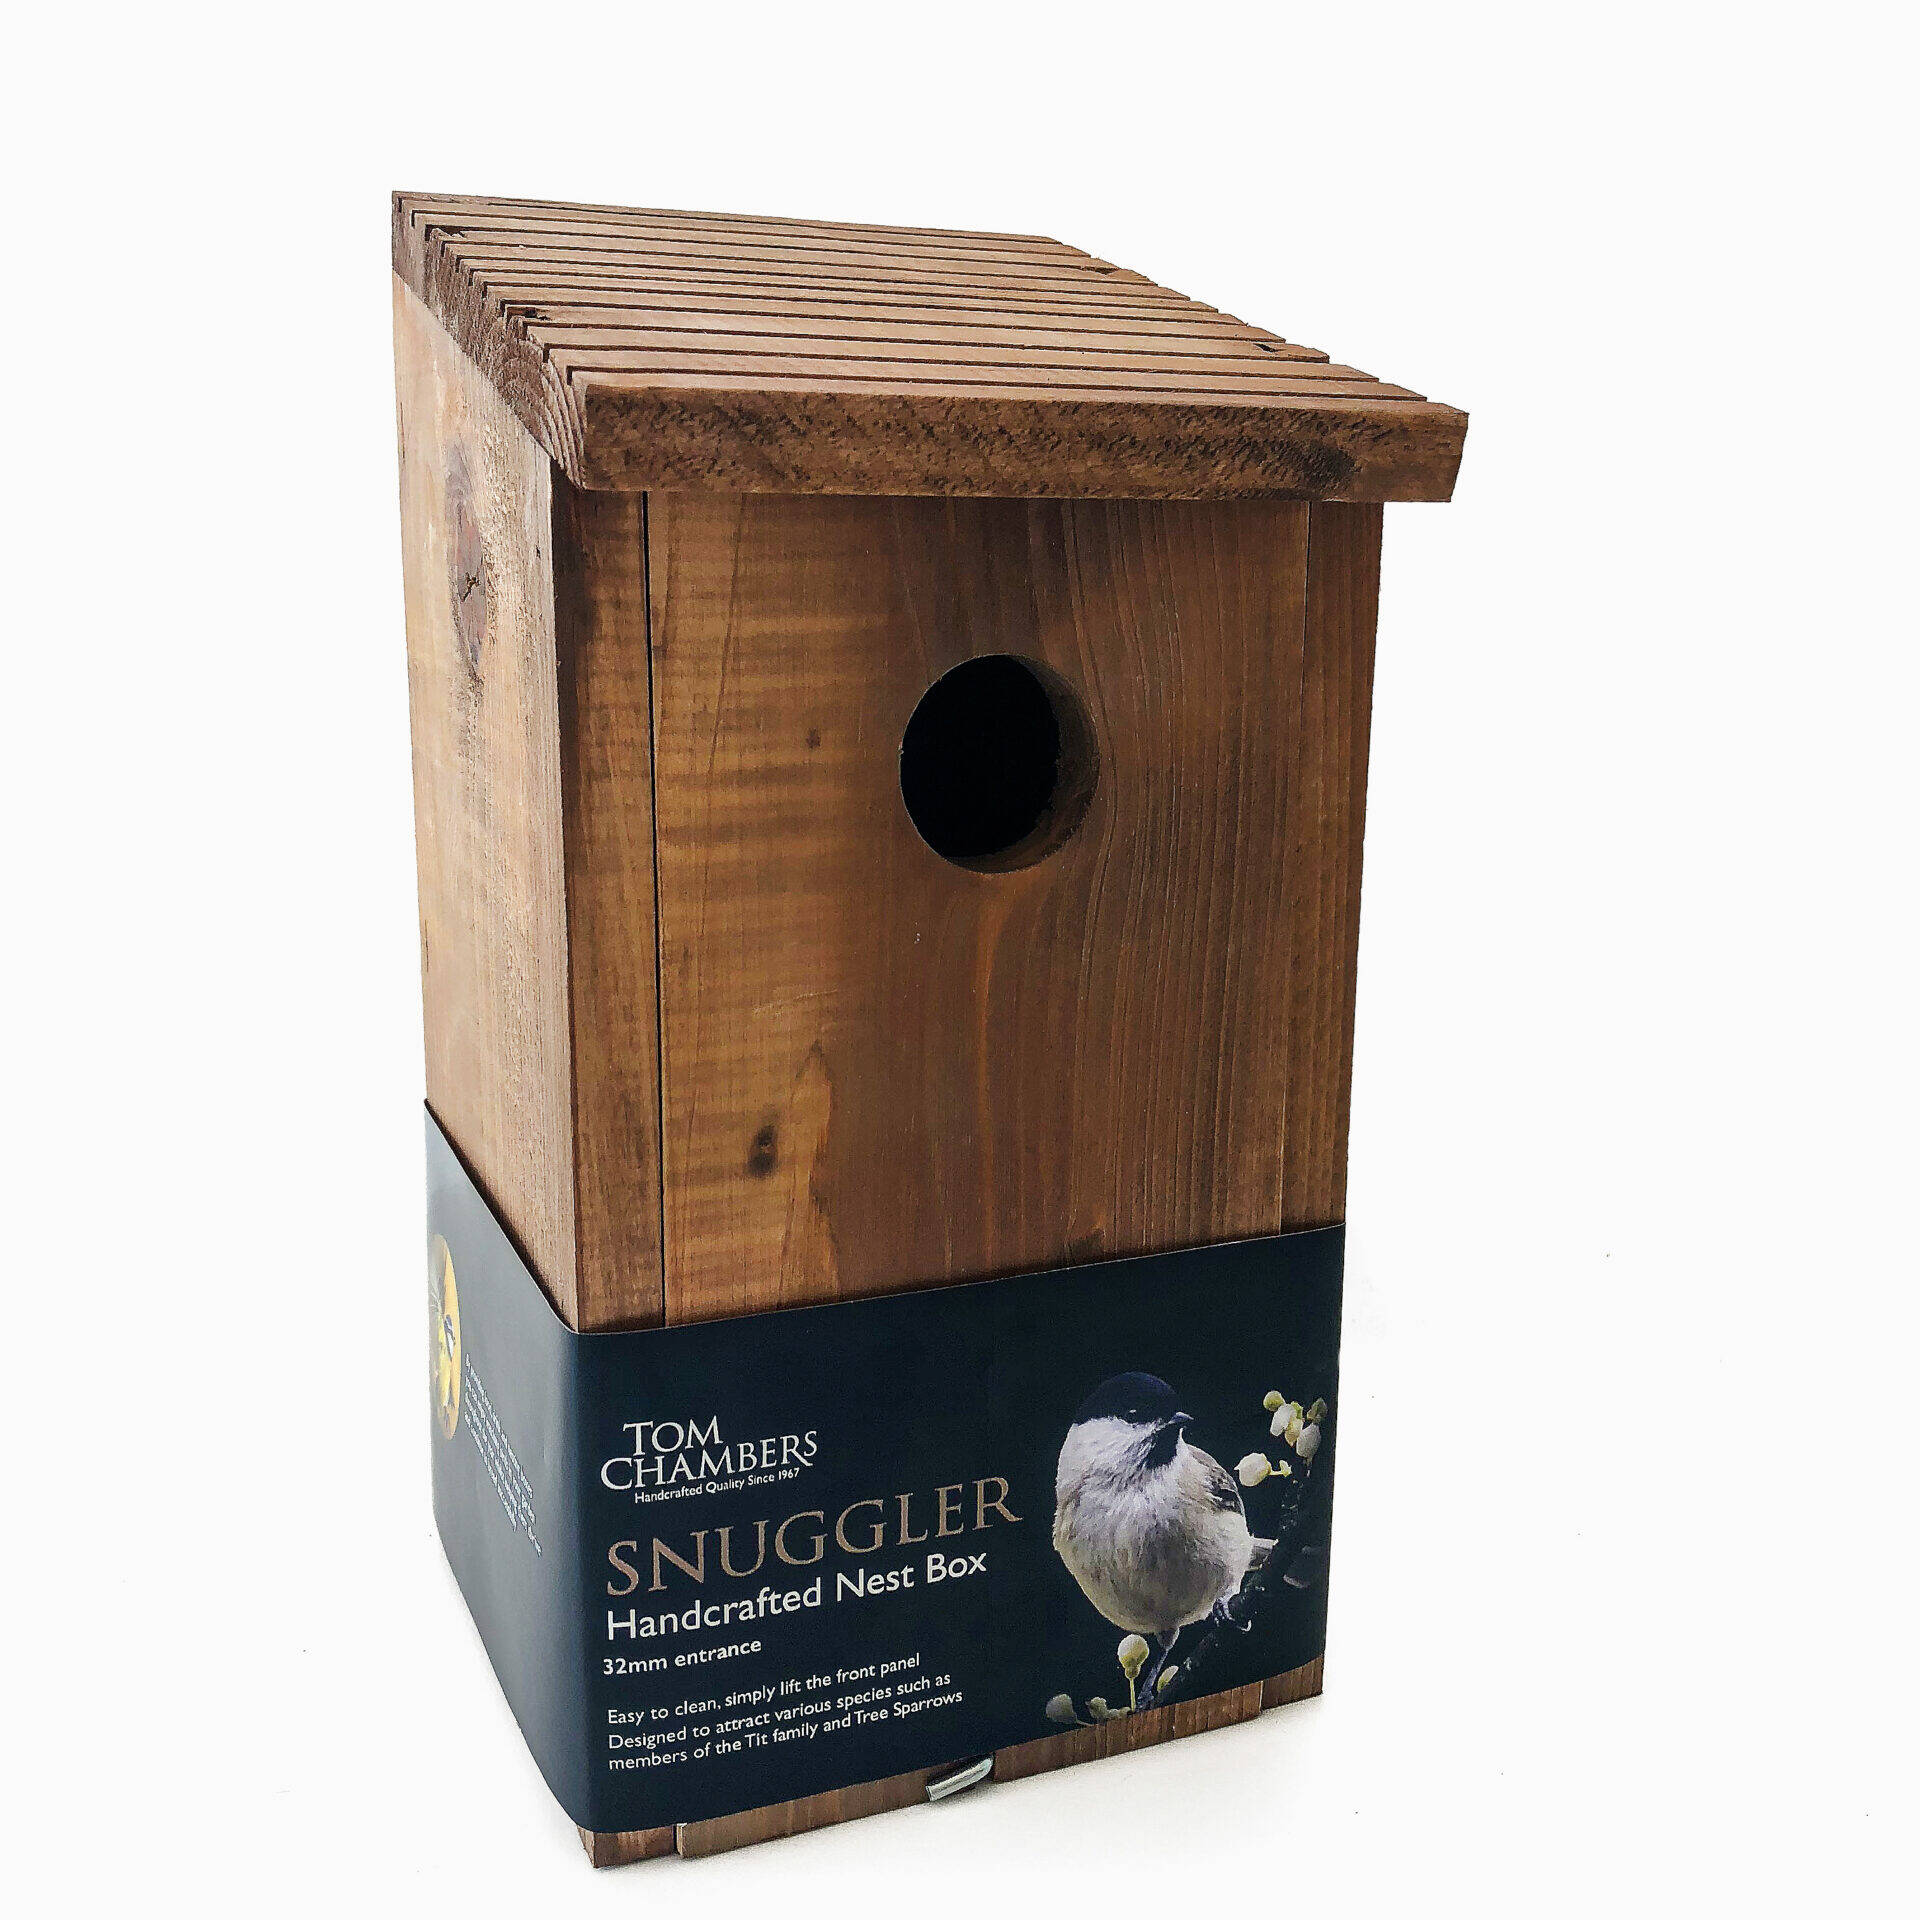 Tom chambers Snuggler Nest Box